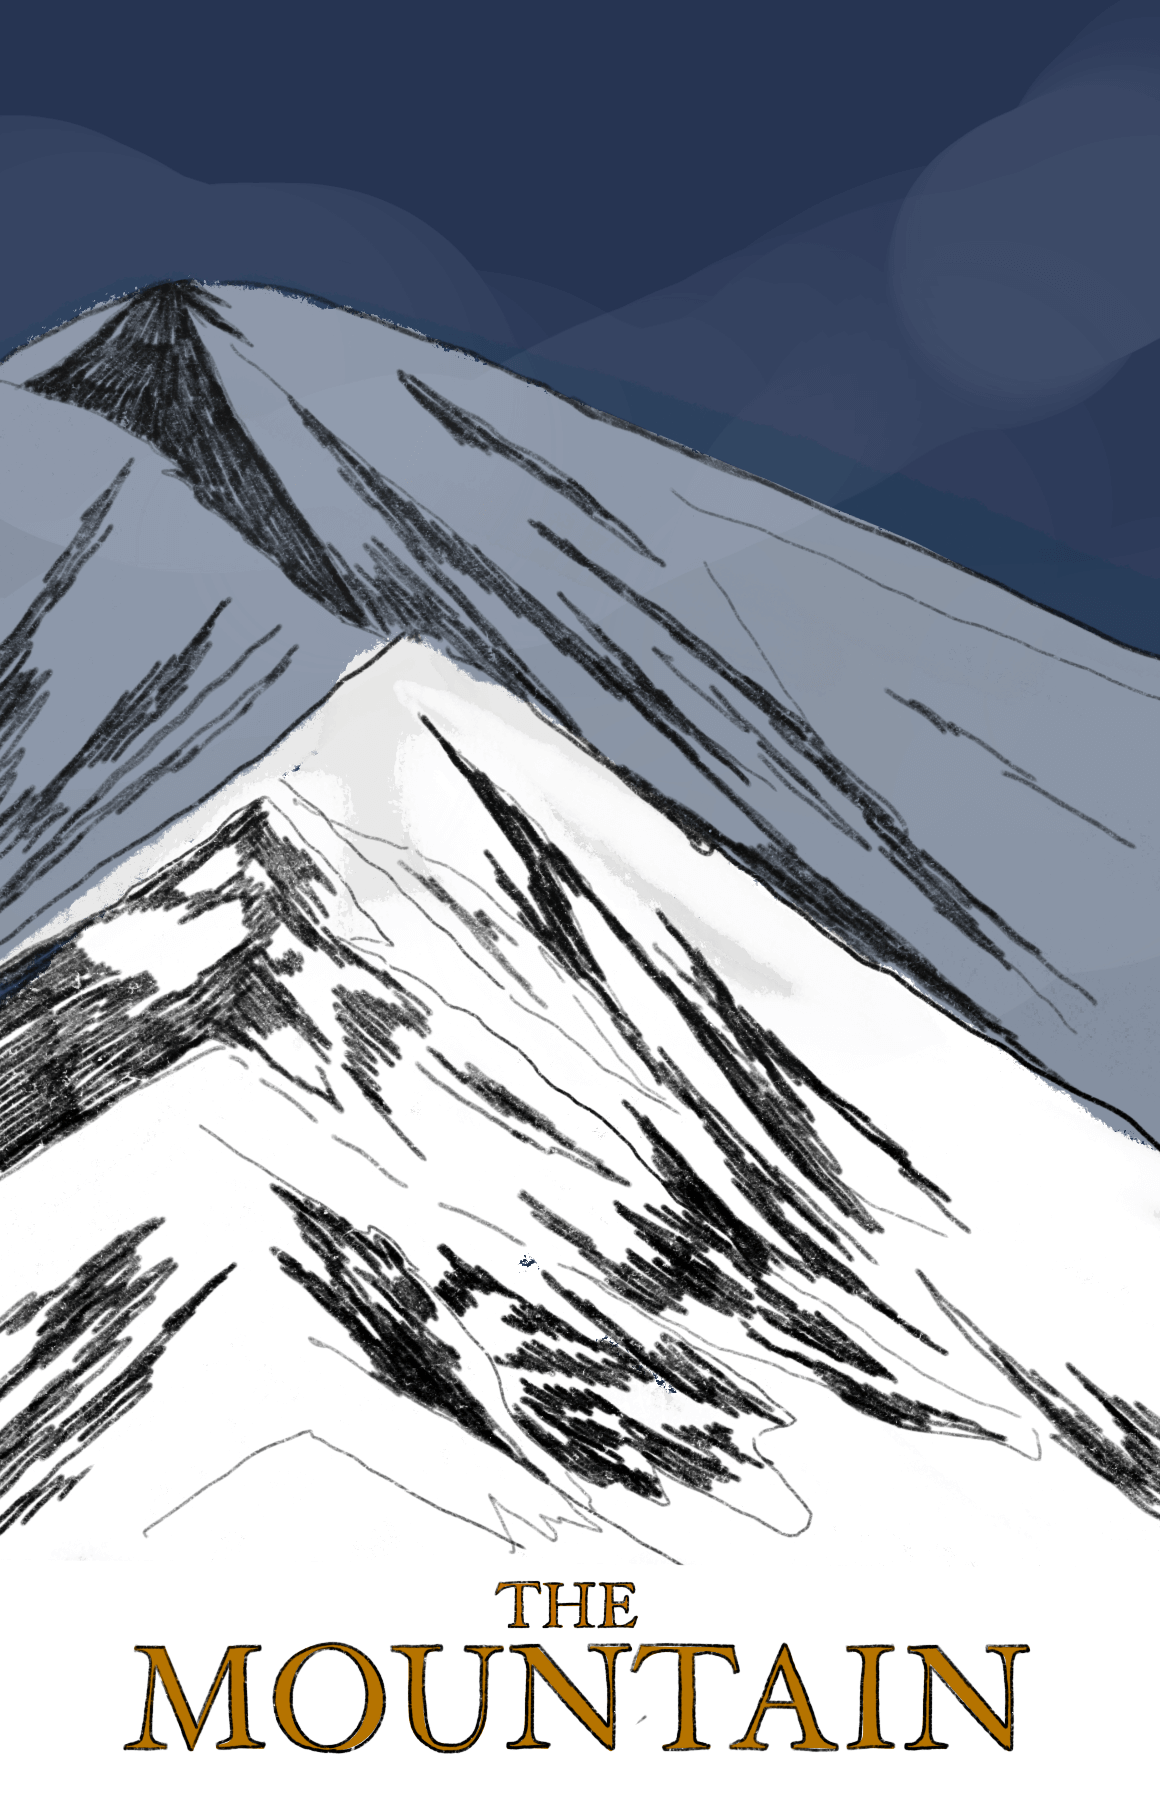 Illustration of Mountains